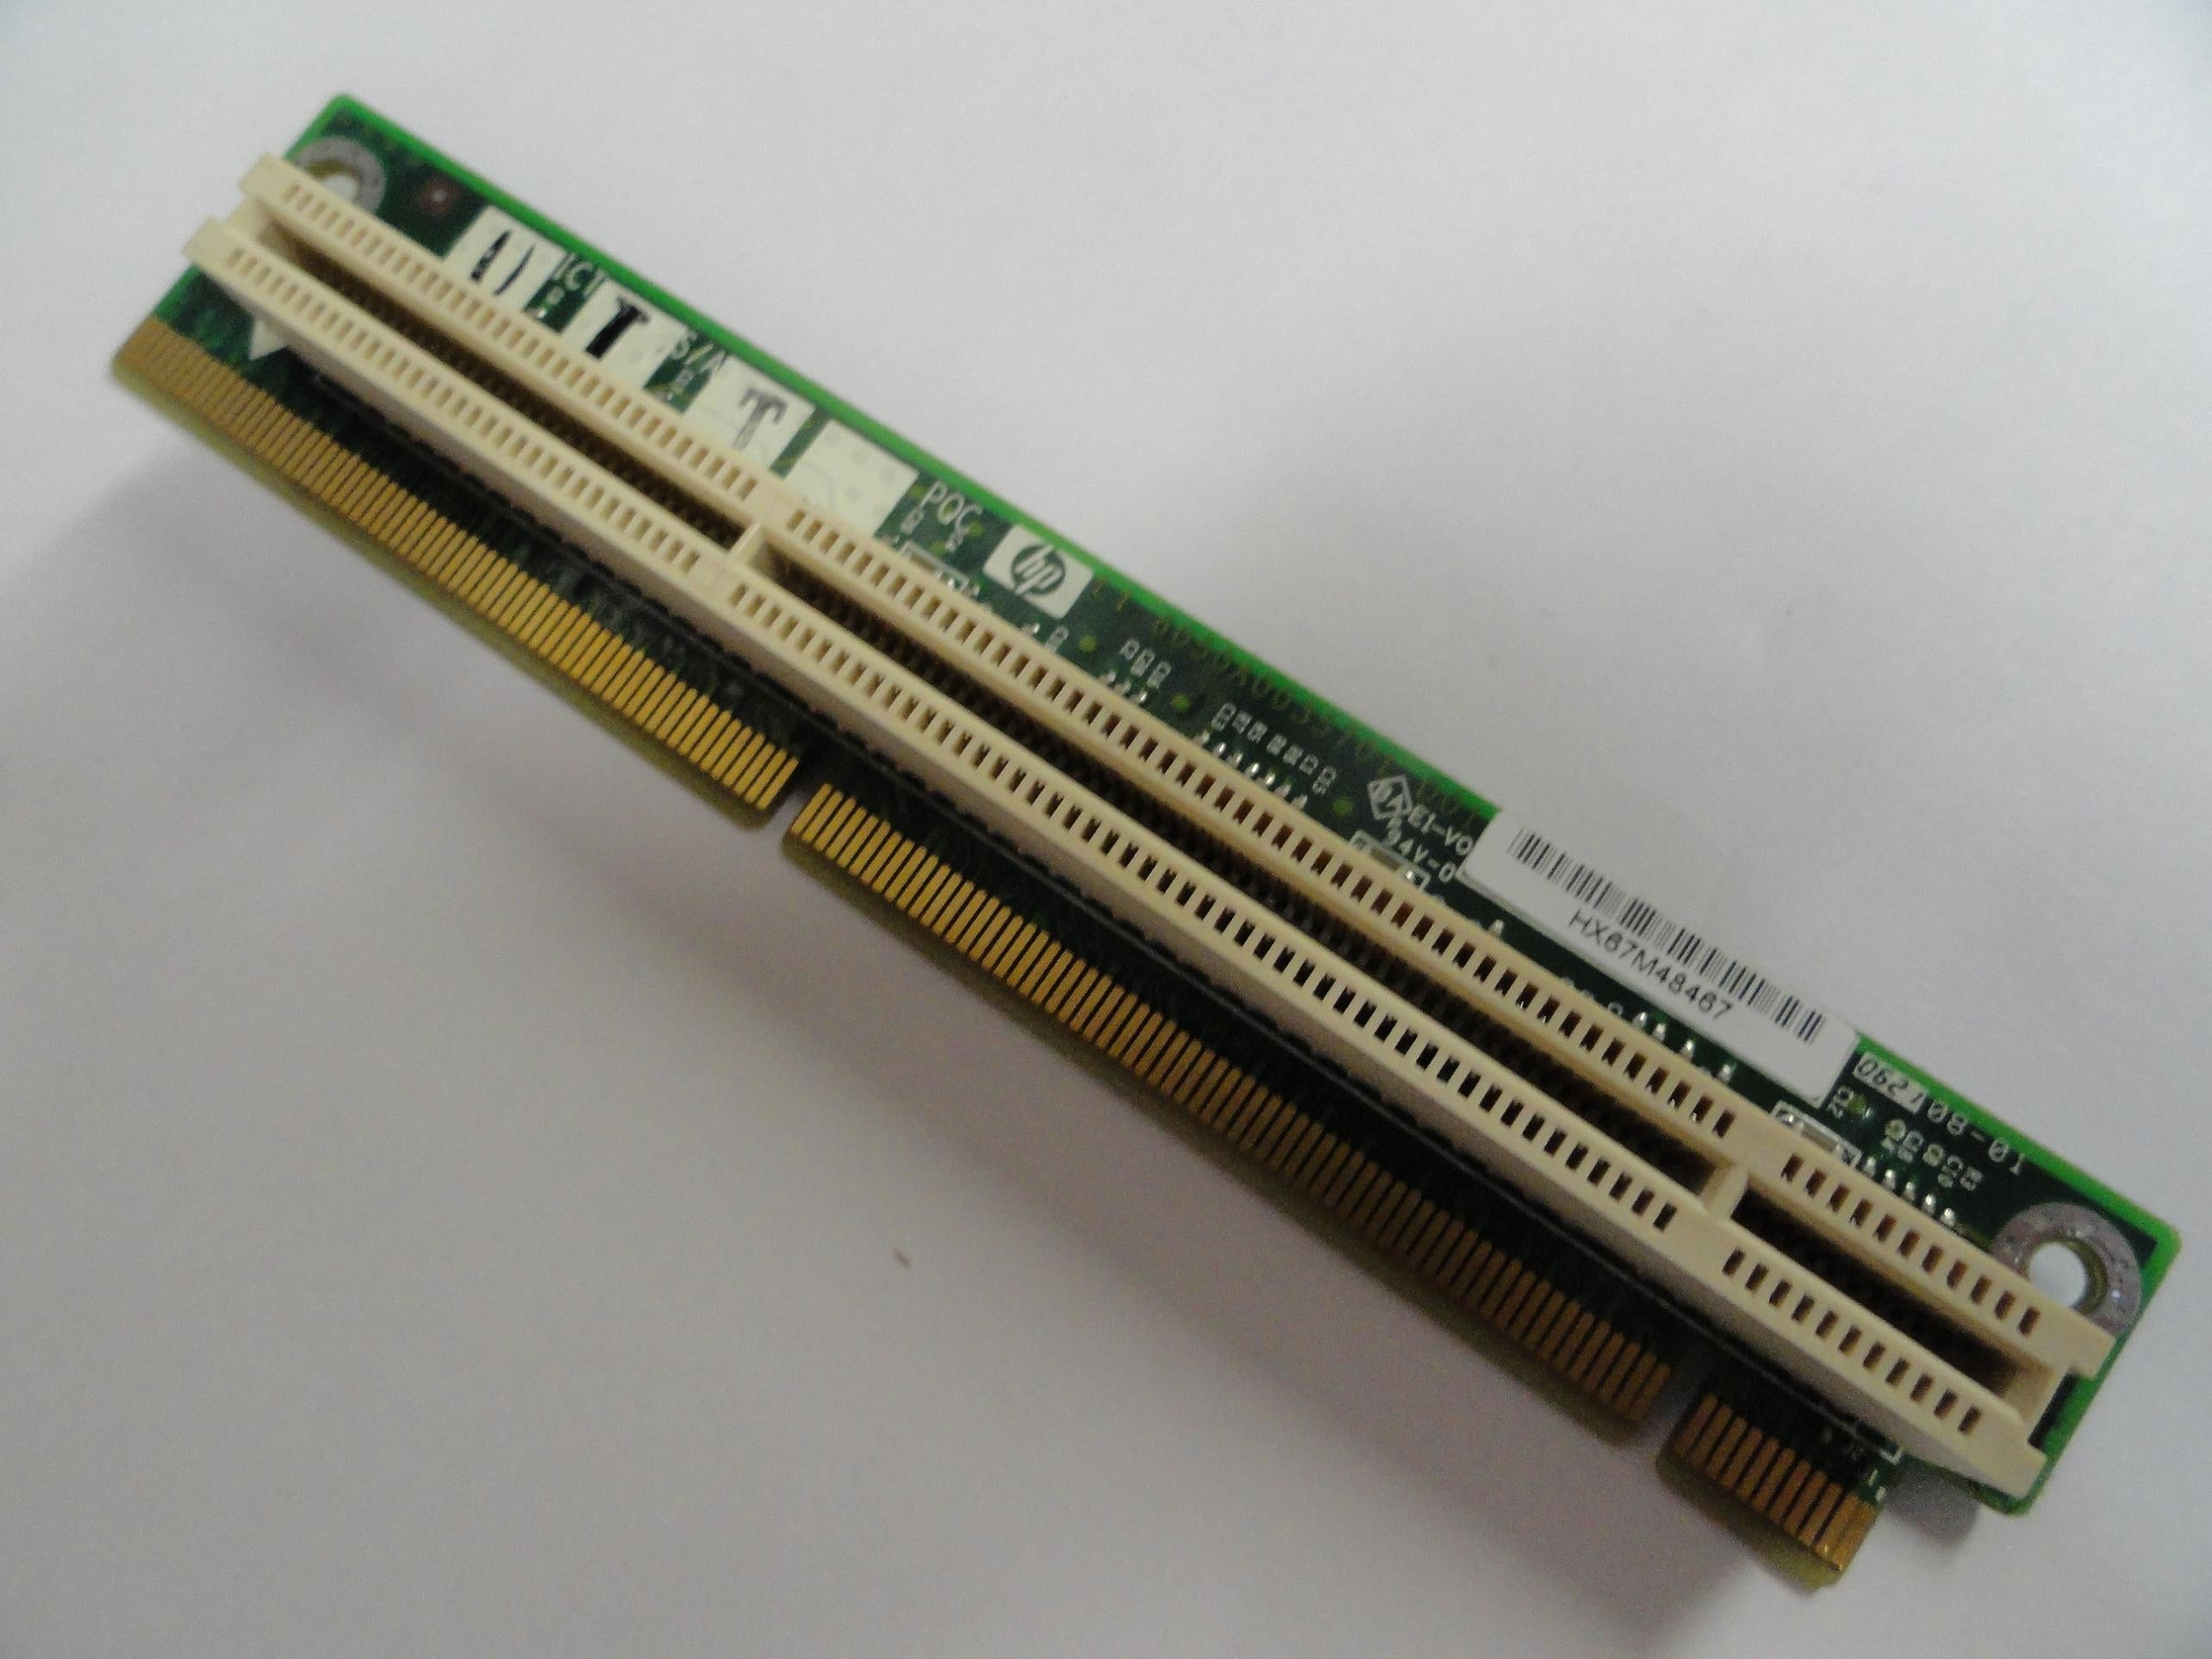 PR16998_409451-001_HP One Port PCI Riser Card - Image2